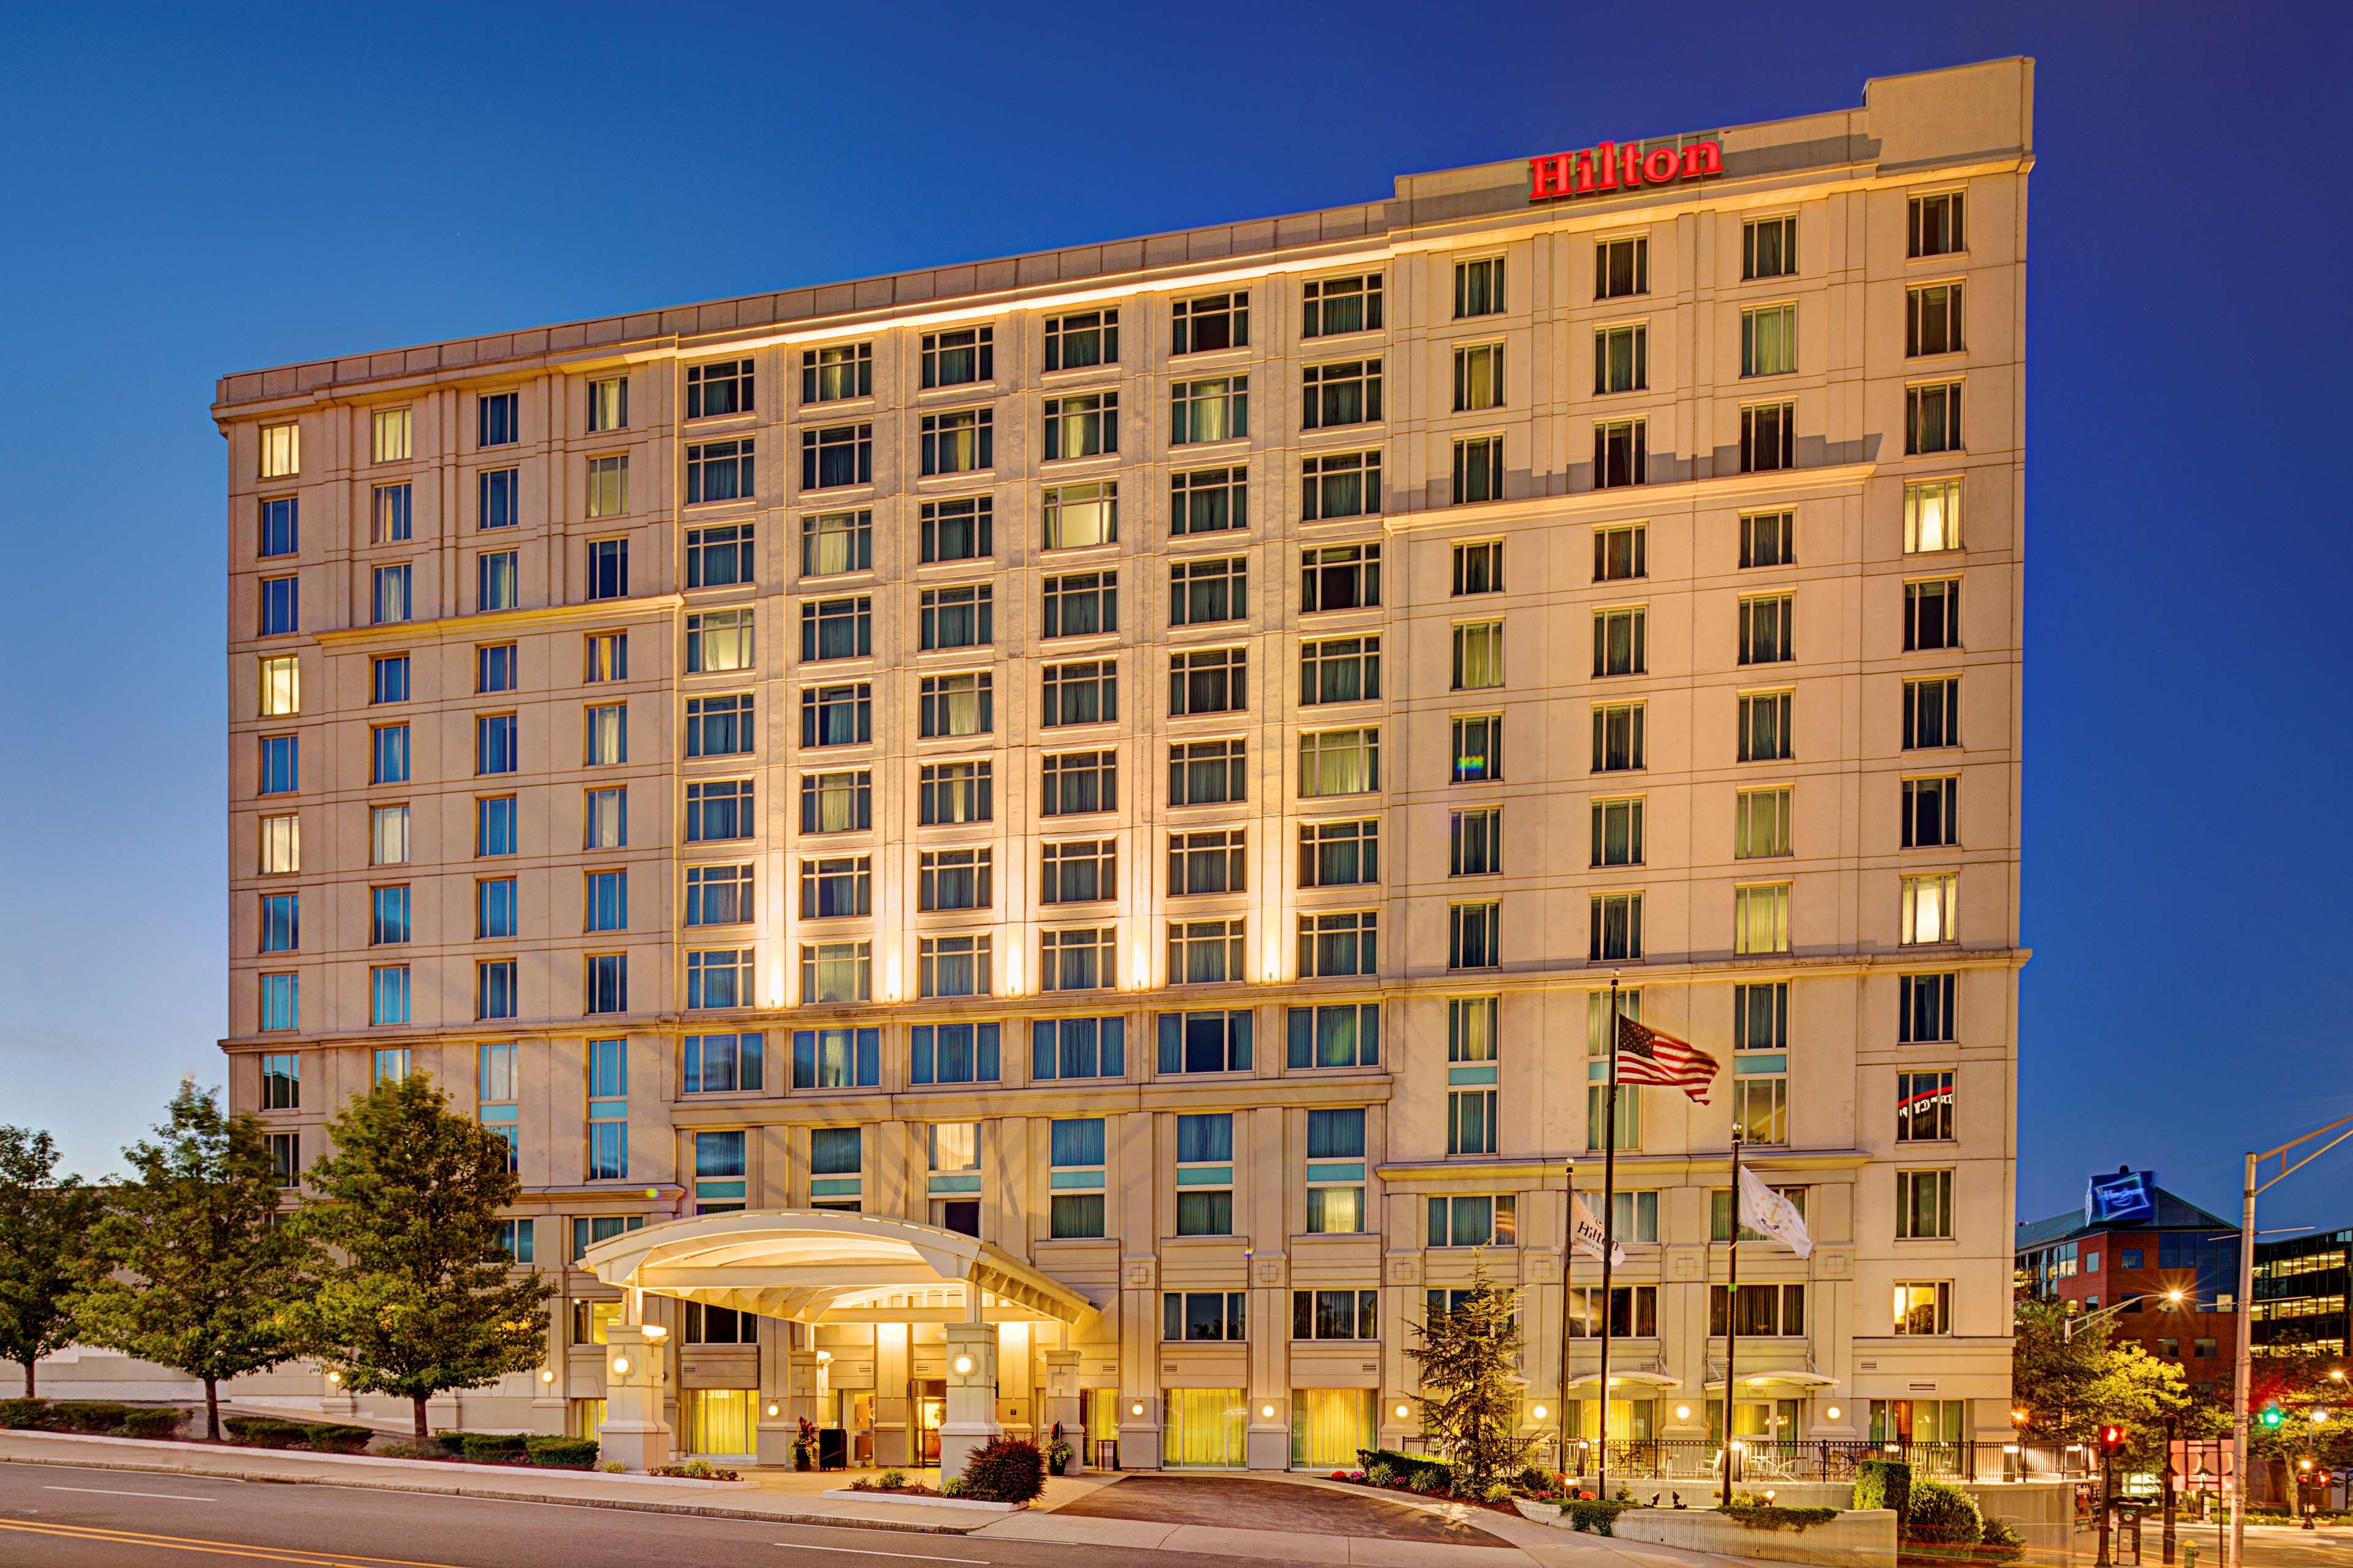 Hilton Providence image